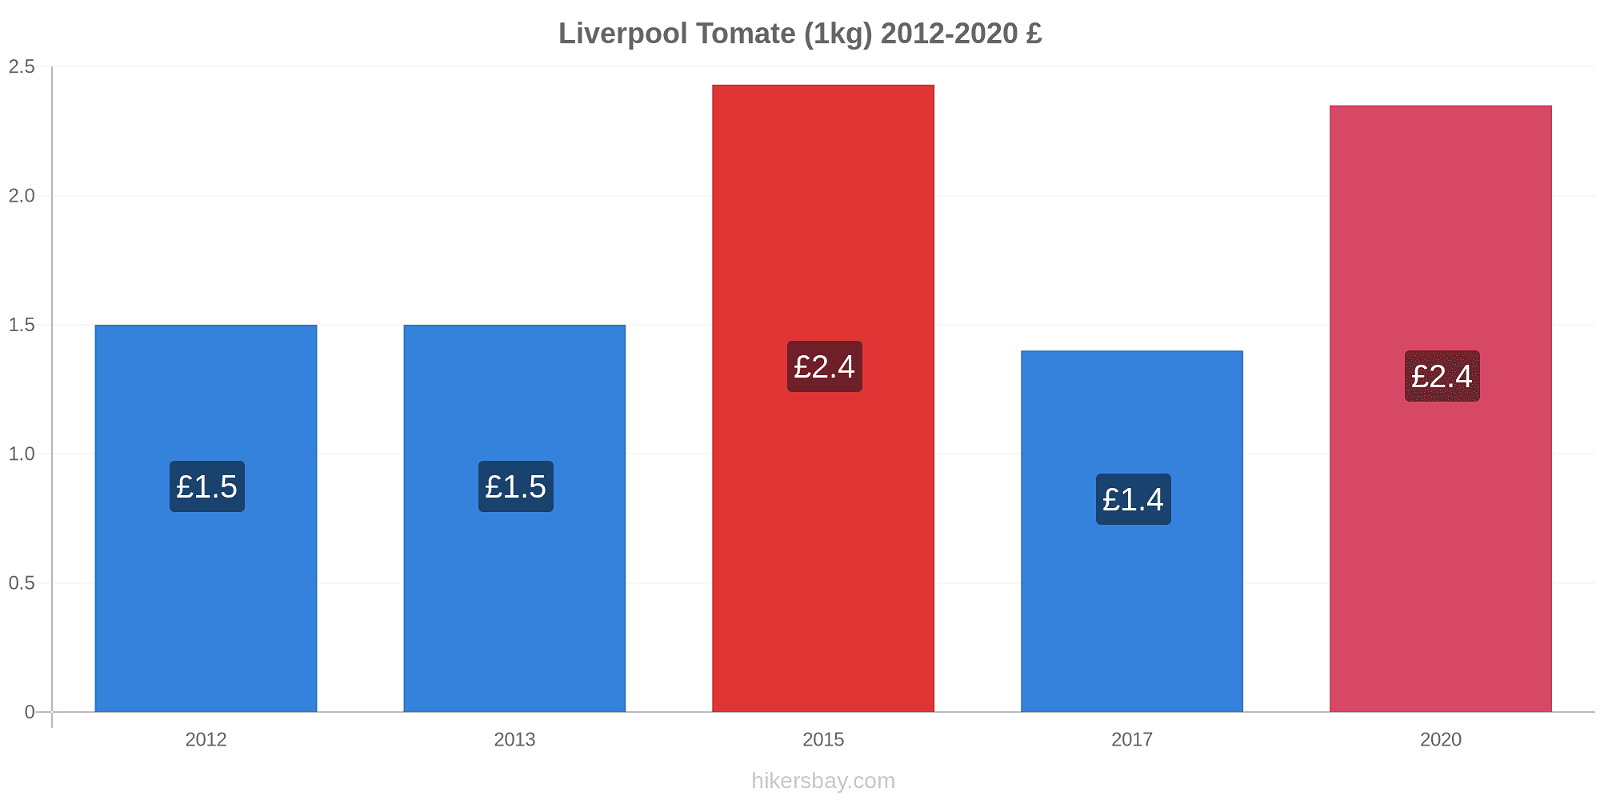 Liverpool changements de prix Tomate (1kg) hikersbay.com